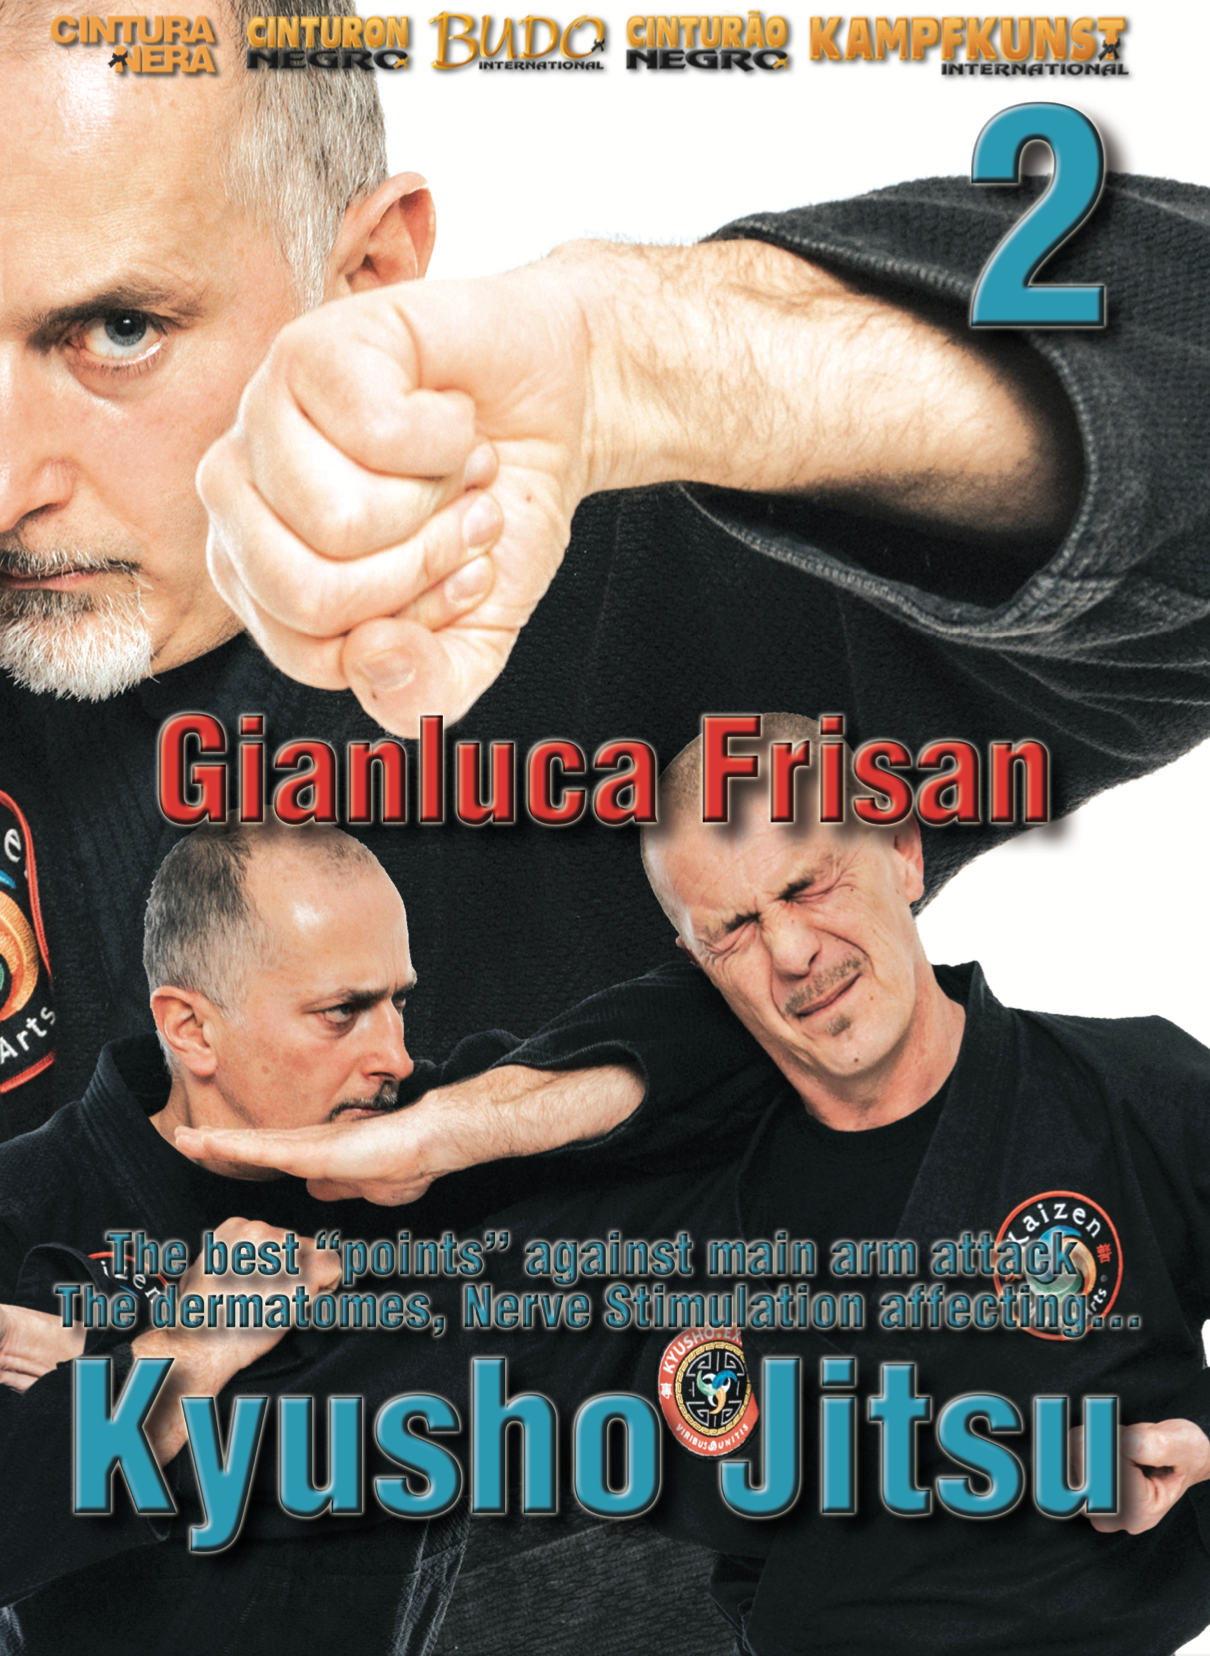 Best Kyusho Jitsu Nerve Stimulation & Arm Attacks DVD 2 with Gianluca Frisan